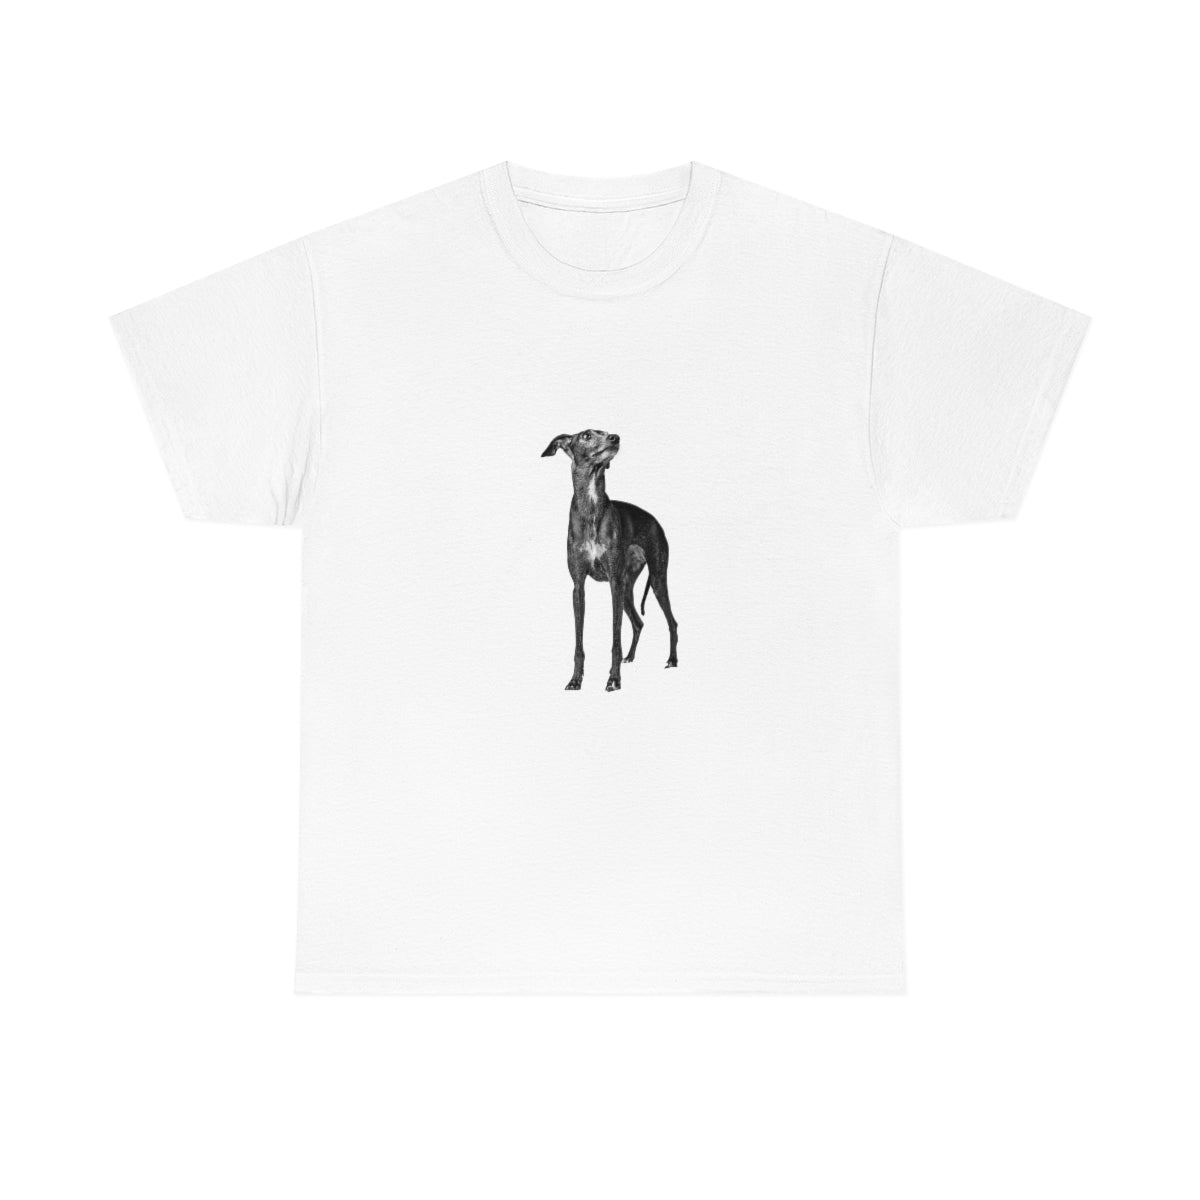 Dog Tshirt, Dog Mom Shirt, Dog Lover Shirt, Dog Mom Gift, Fur Mama Shirt, Gift For Dog Lover, Dog Mama Shirt, Cute Fur Mom Gift - The Good Life Vibe